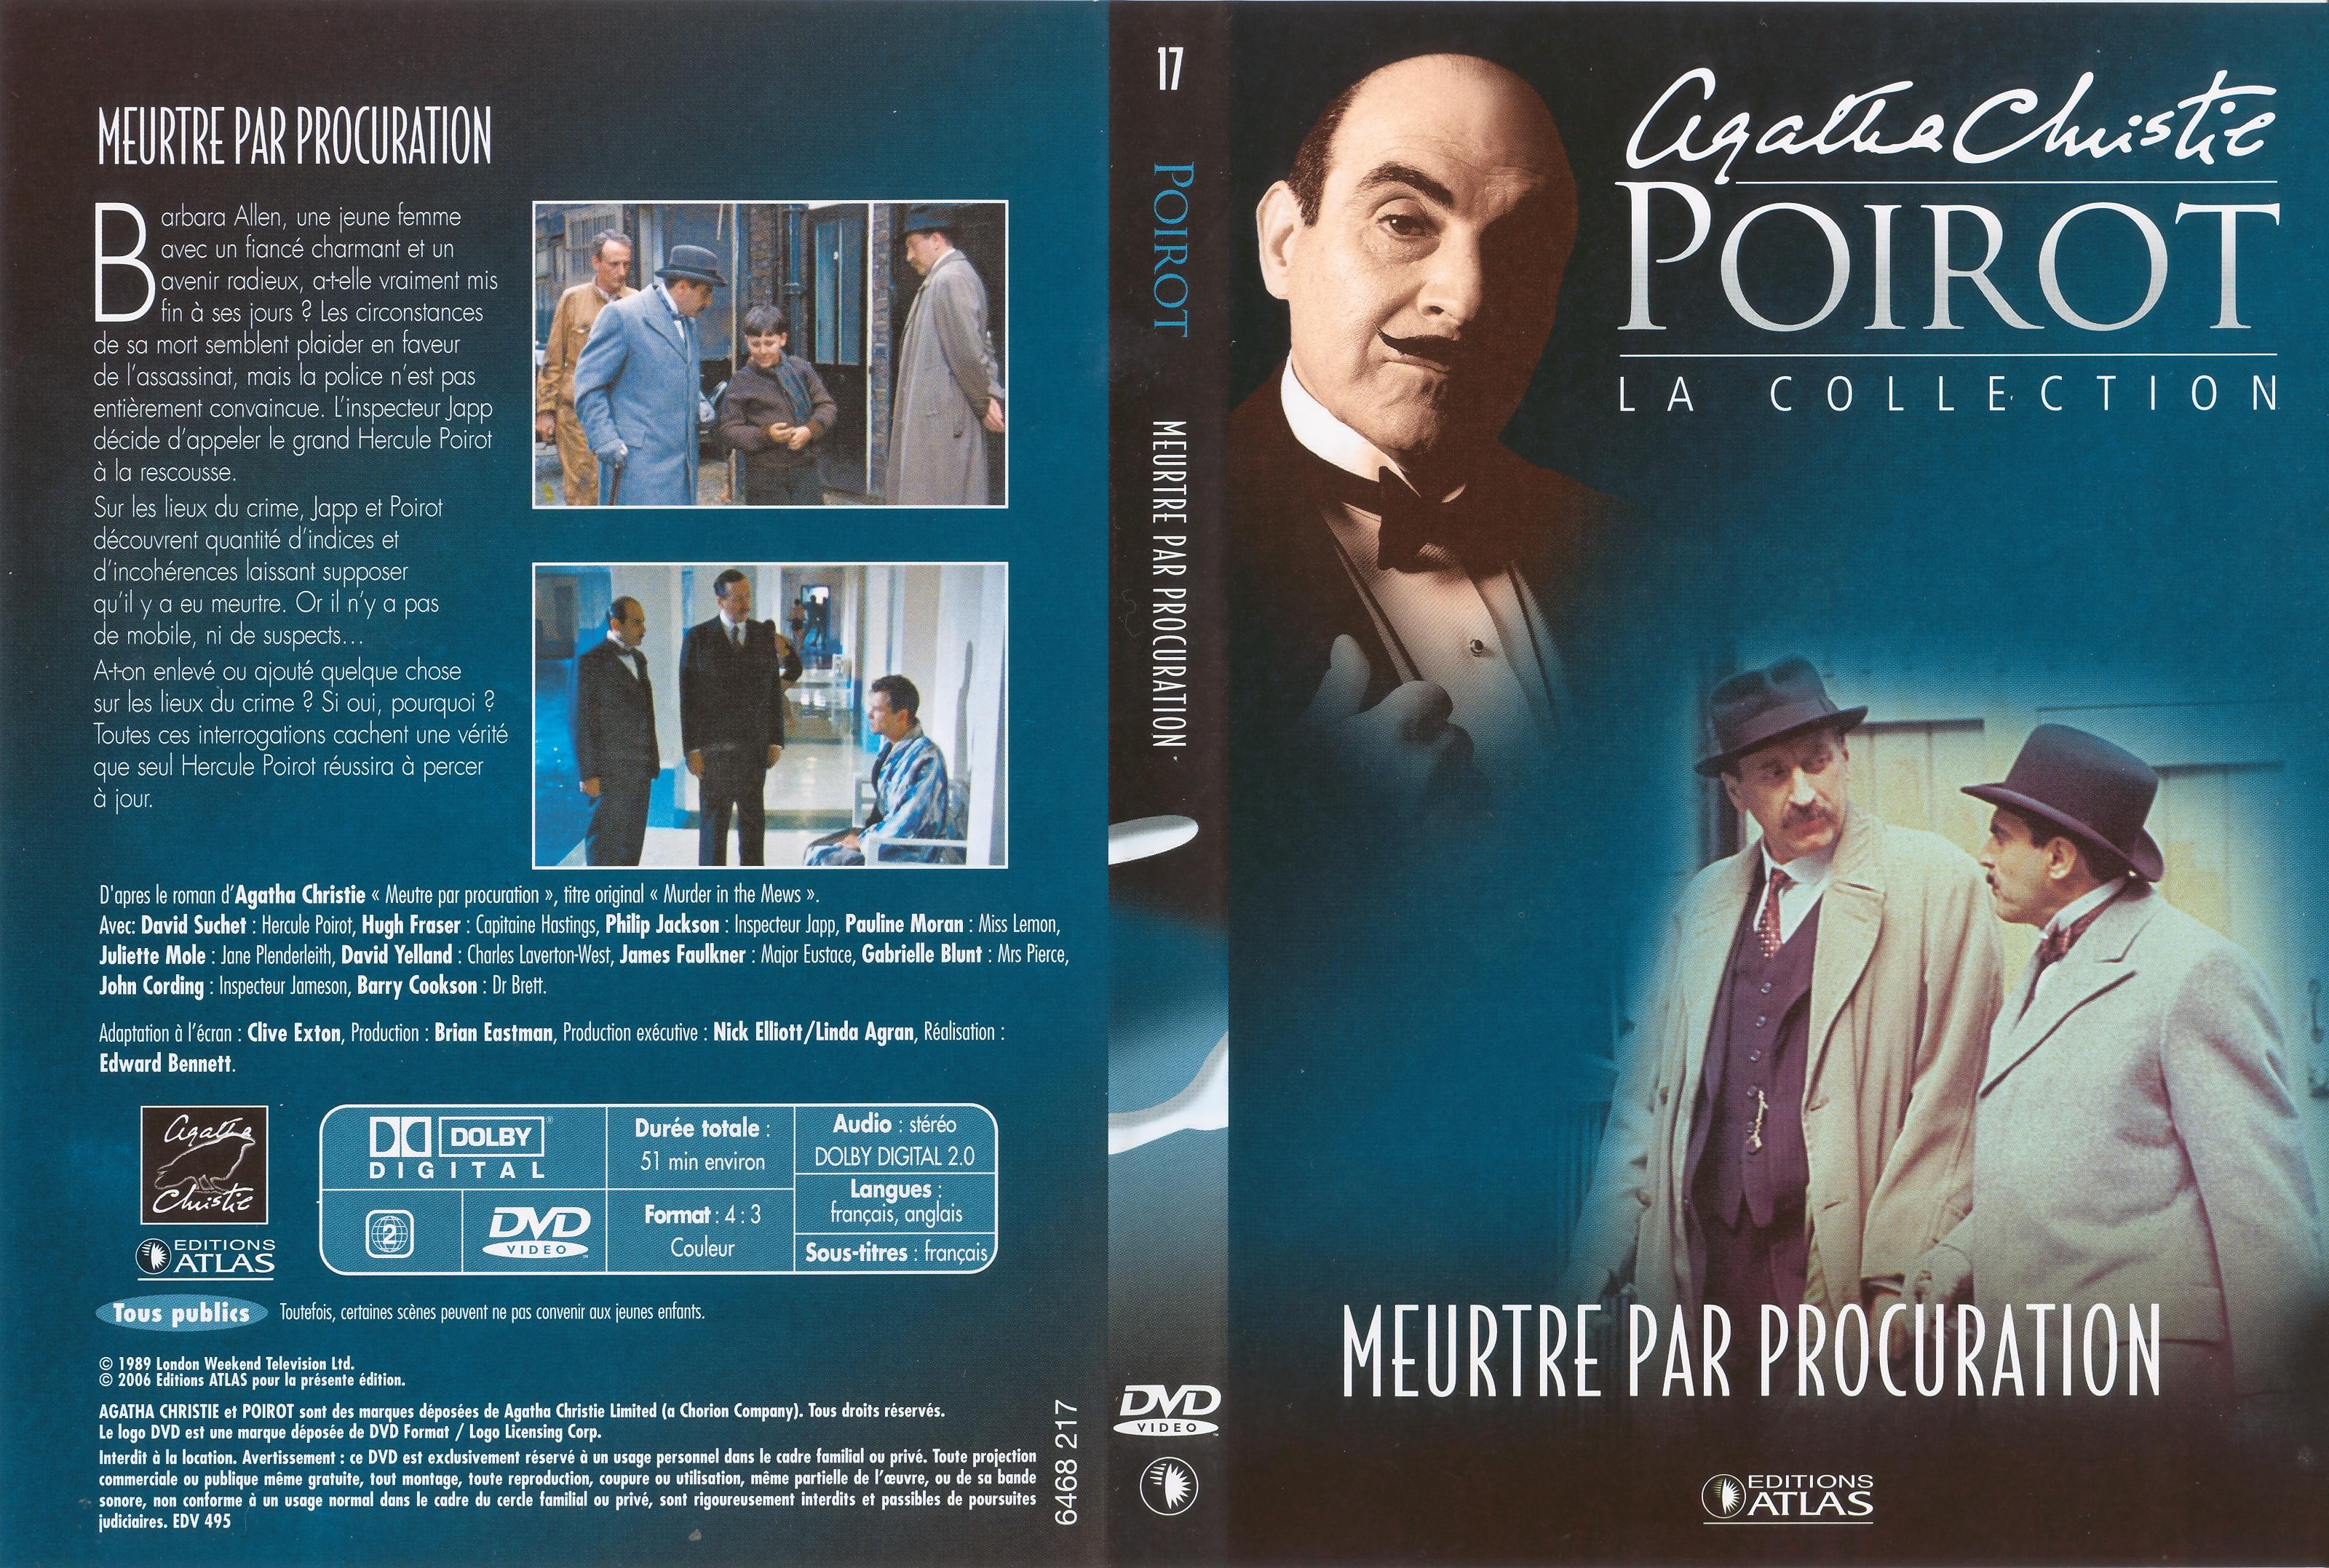 Jaquette DVD Hercule Poirot vol 17